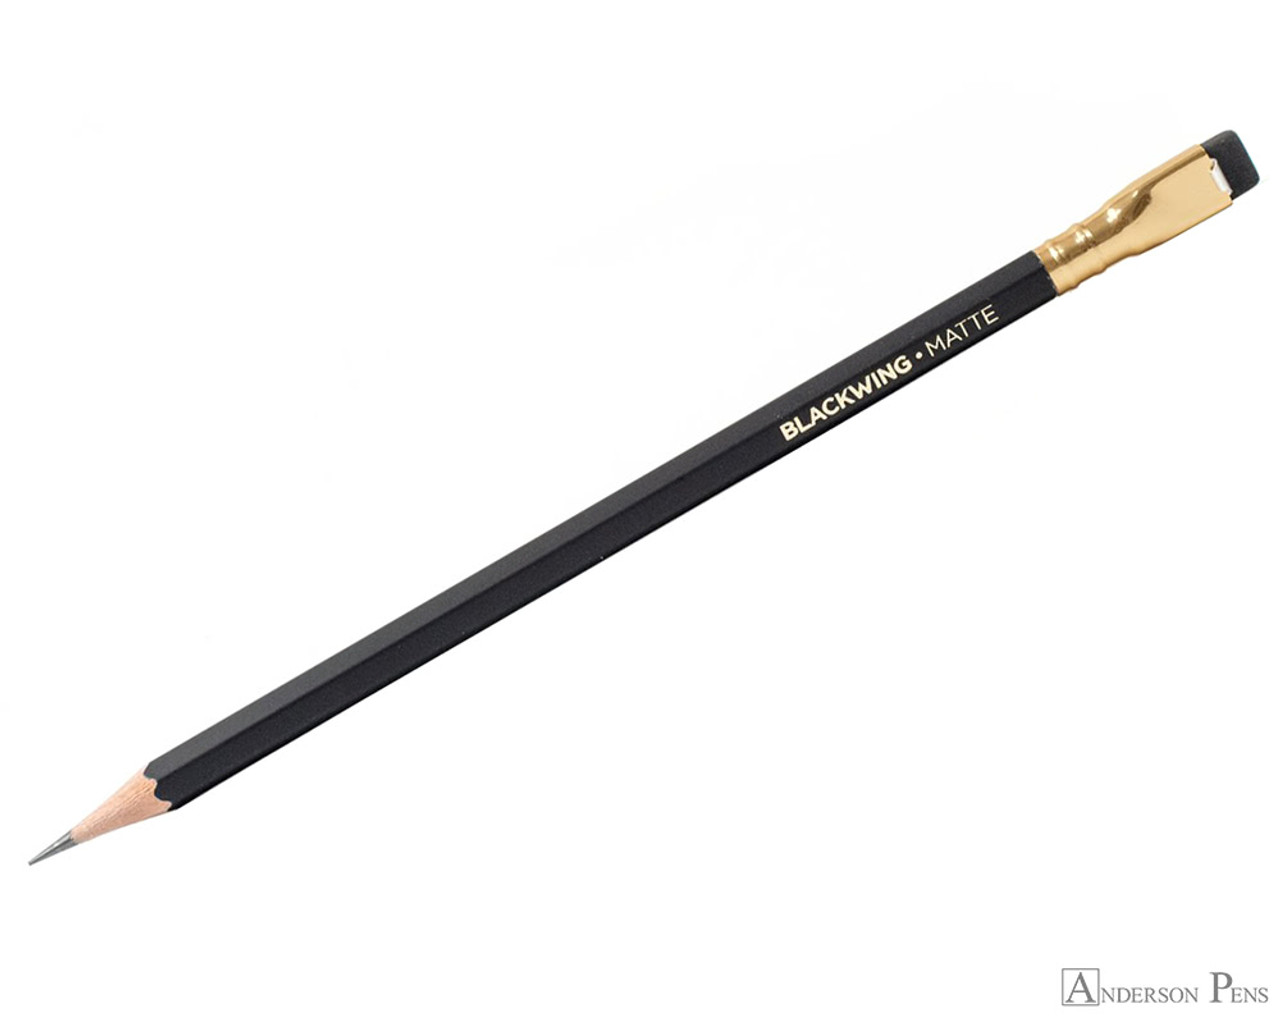 Pencil Review: The Original (Palomino) Blackwing — The Gentleman